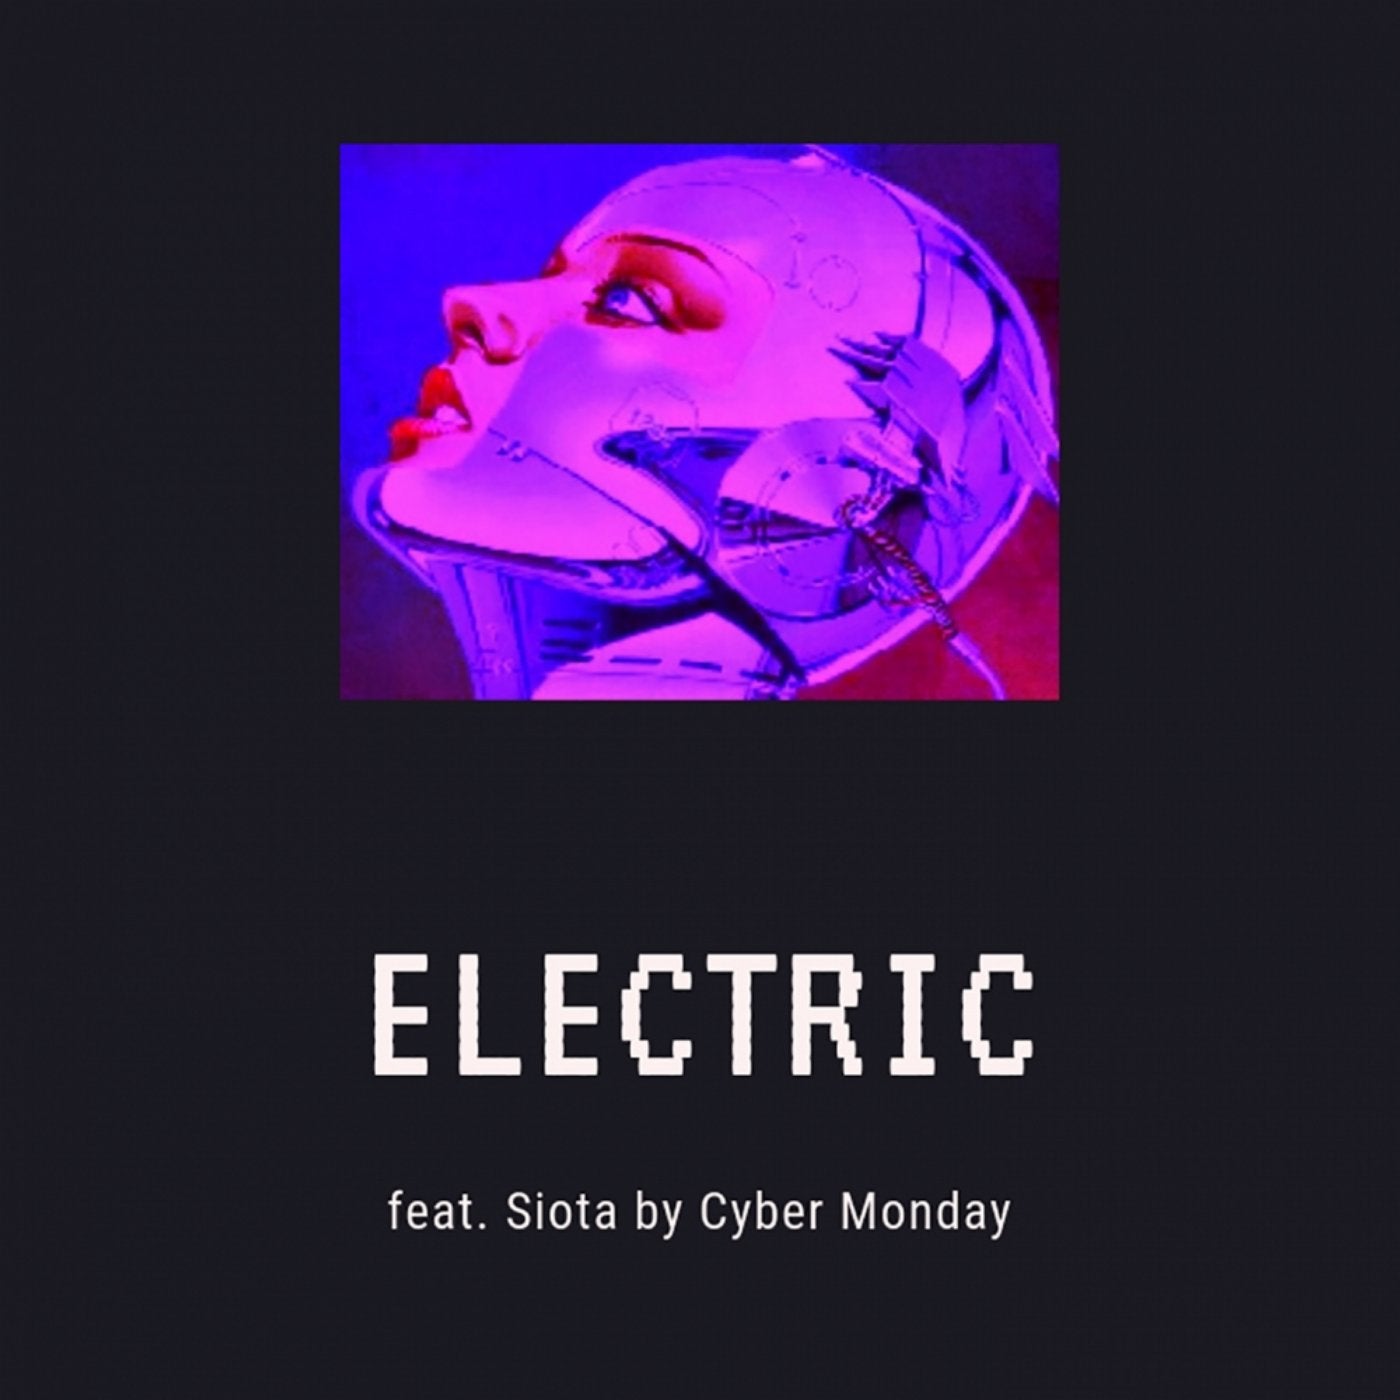 Electric EP